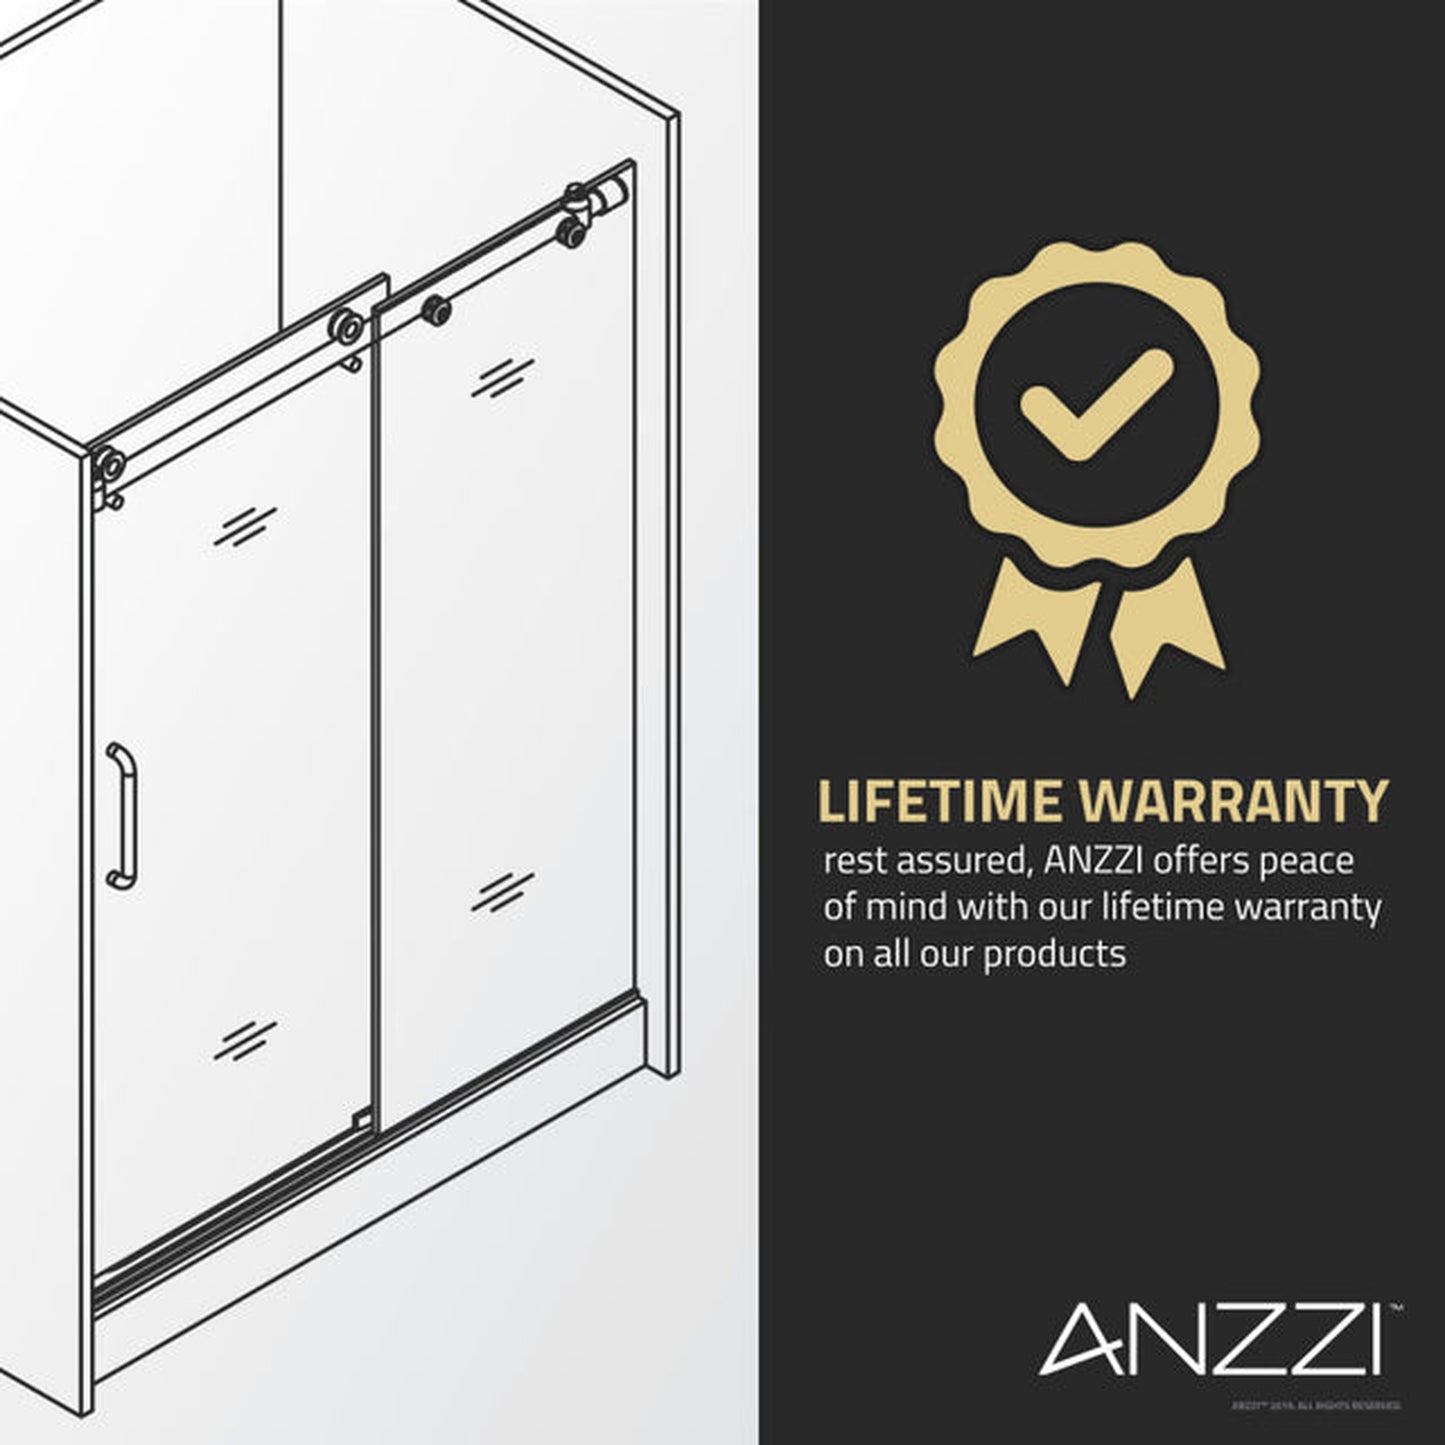 ANZZI Madam Series 48" x 76" Frameless Rectangular Brushed Nickel Sliding Shower Door With Handle and Tsunami Guard